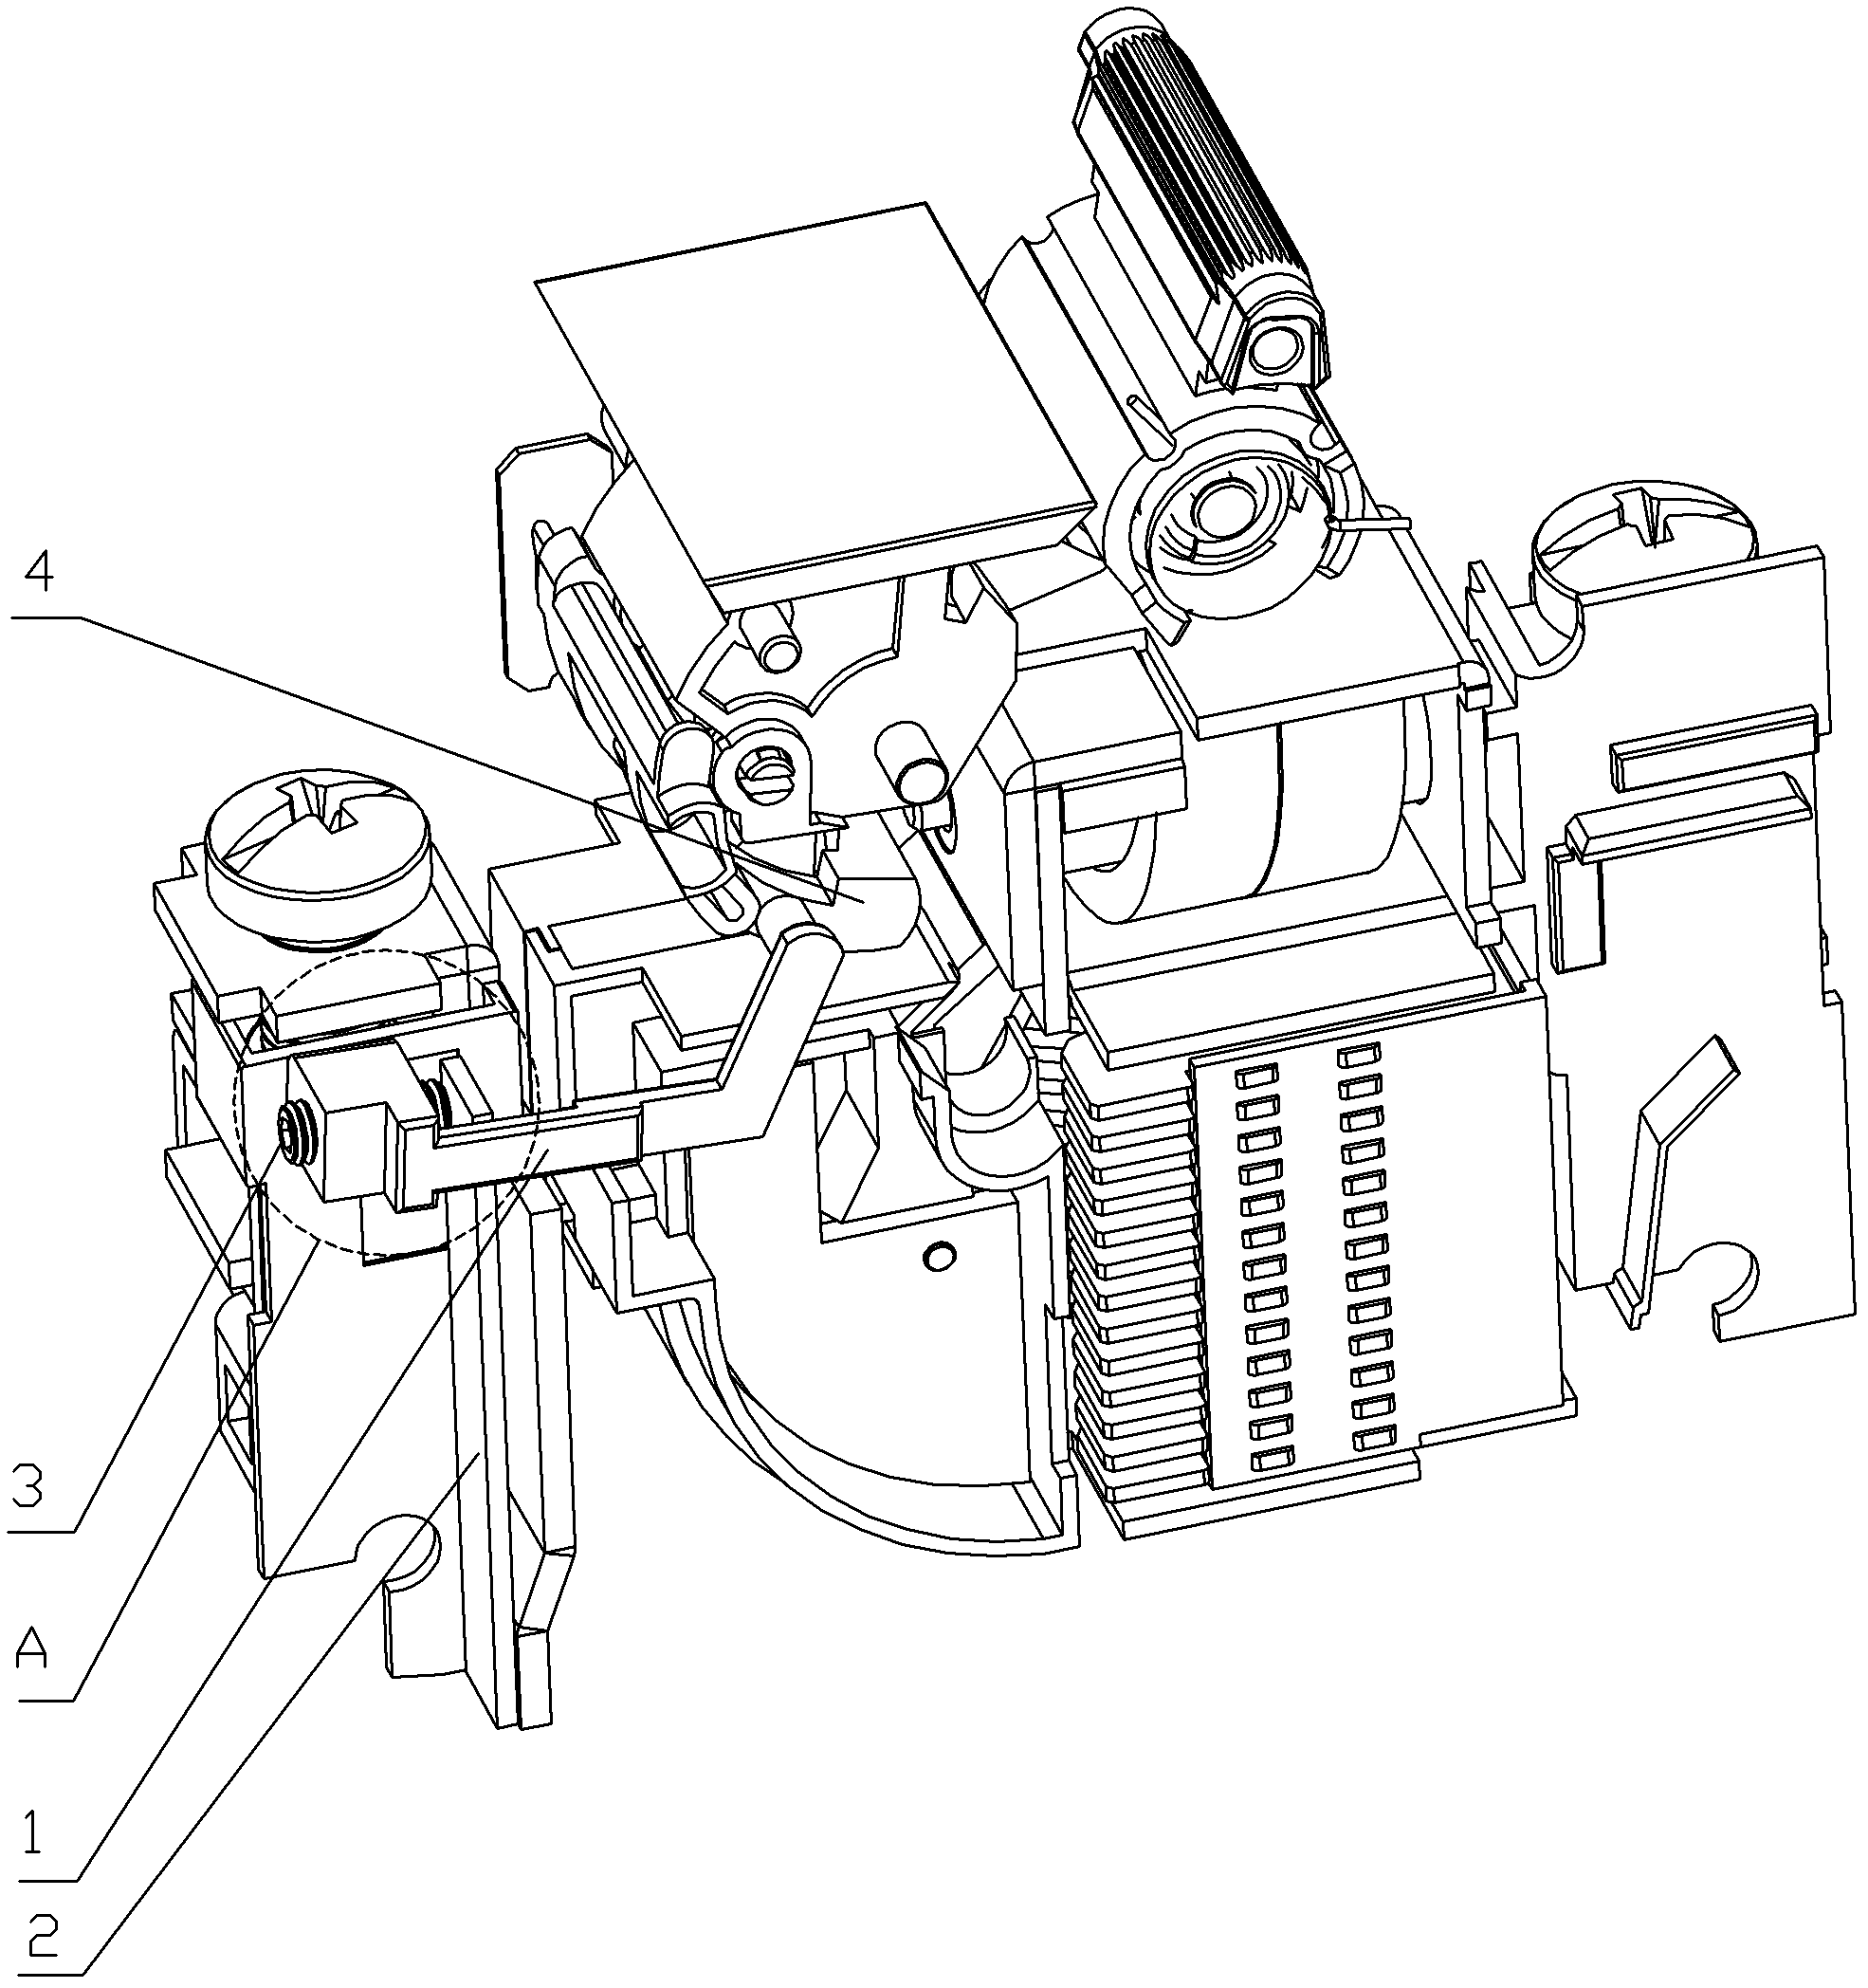 Small-sized circuit breaker